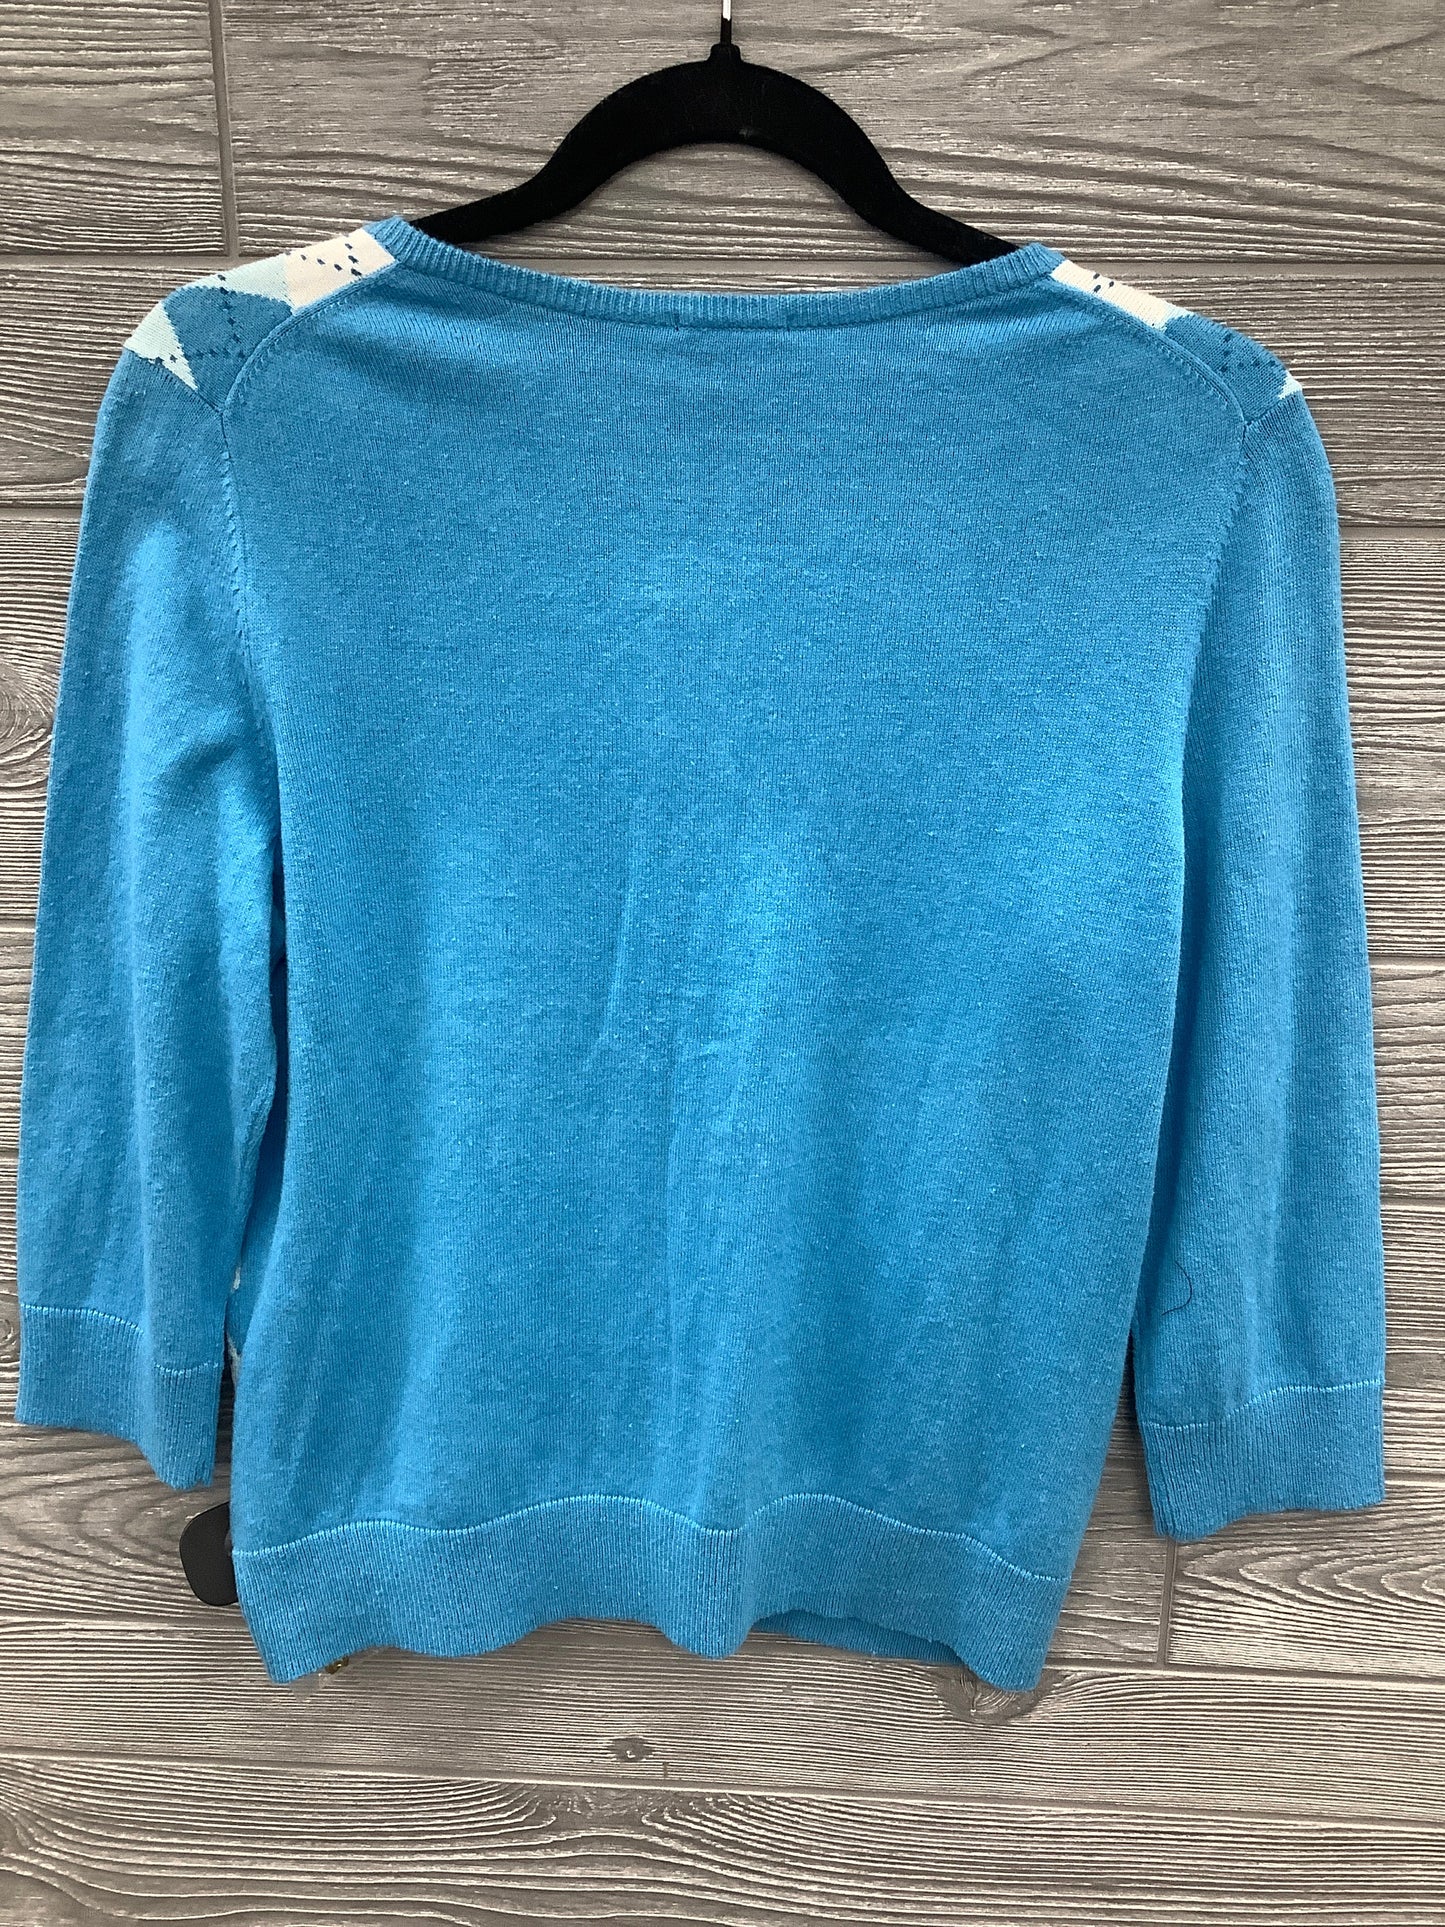 Sweater Cardigan By Talbots  Size: Petite  Medium